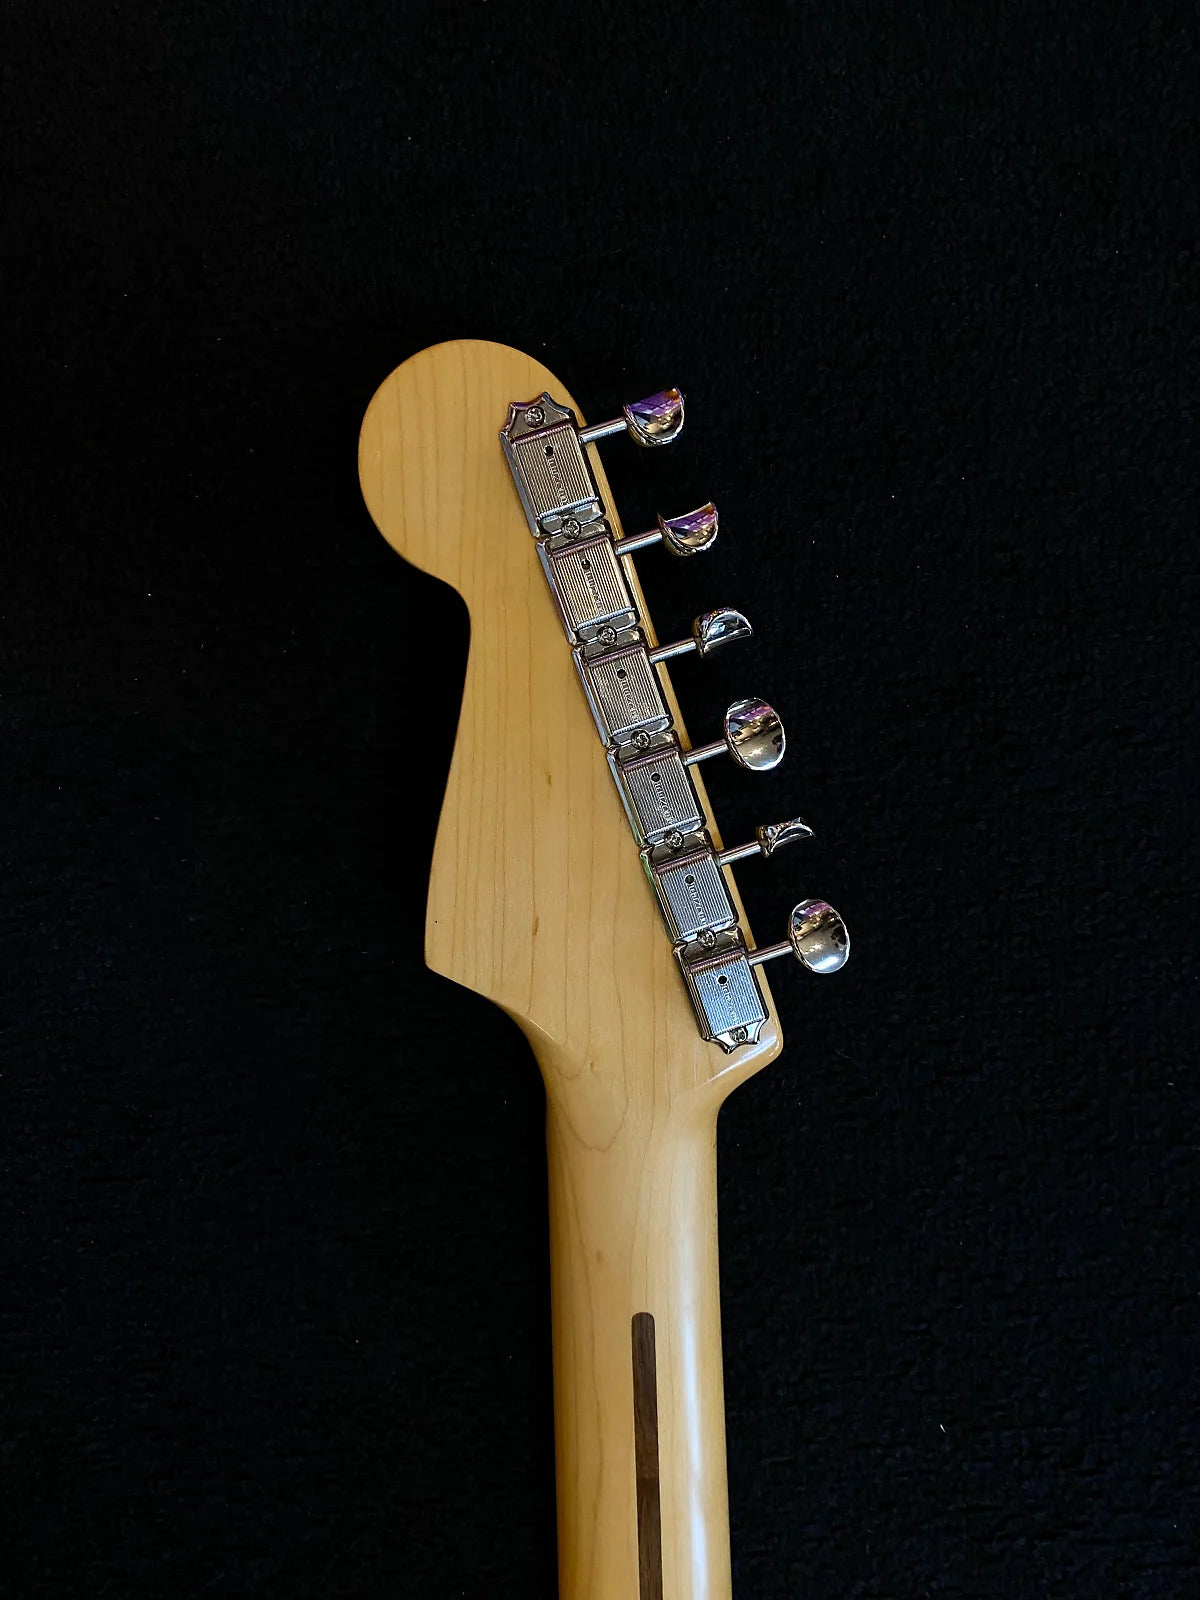 *USED* Fender American Original 50's Stratocaster - White Blonde